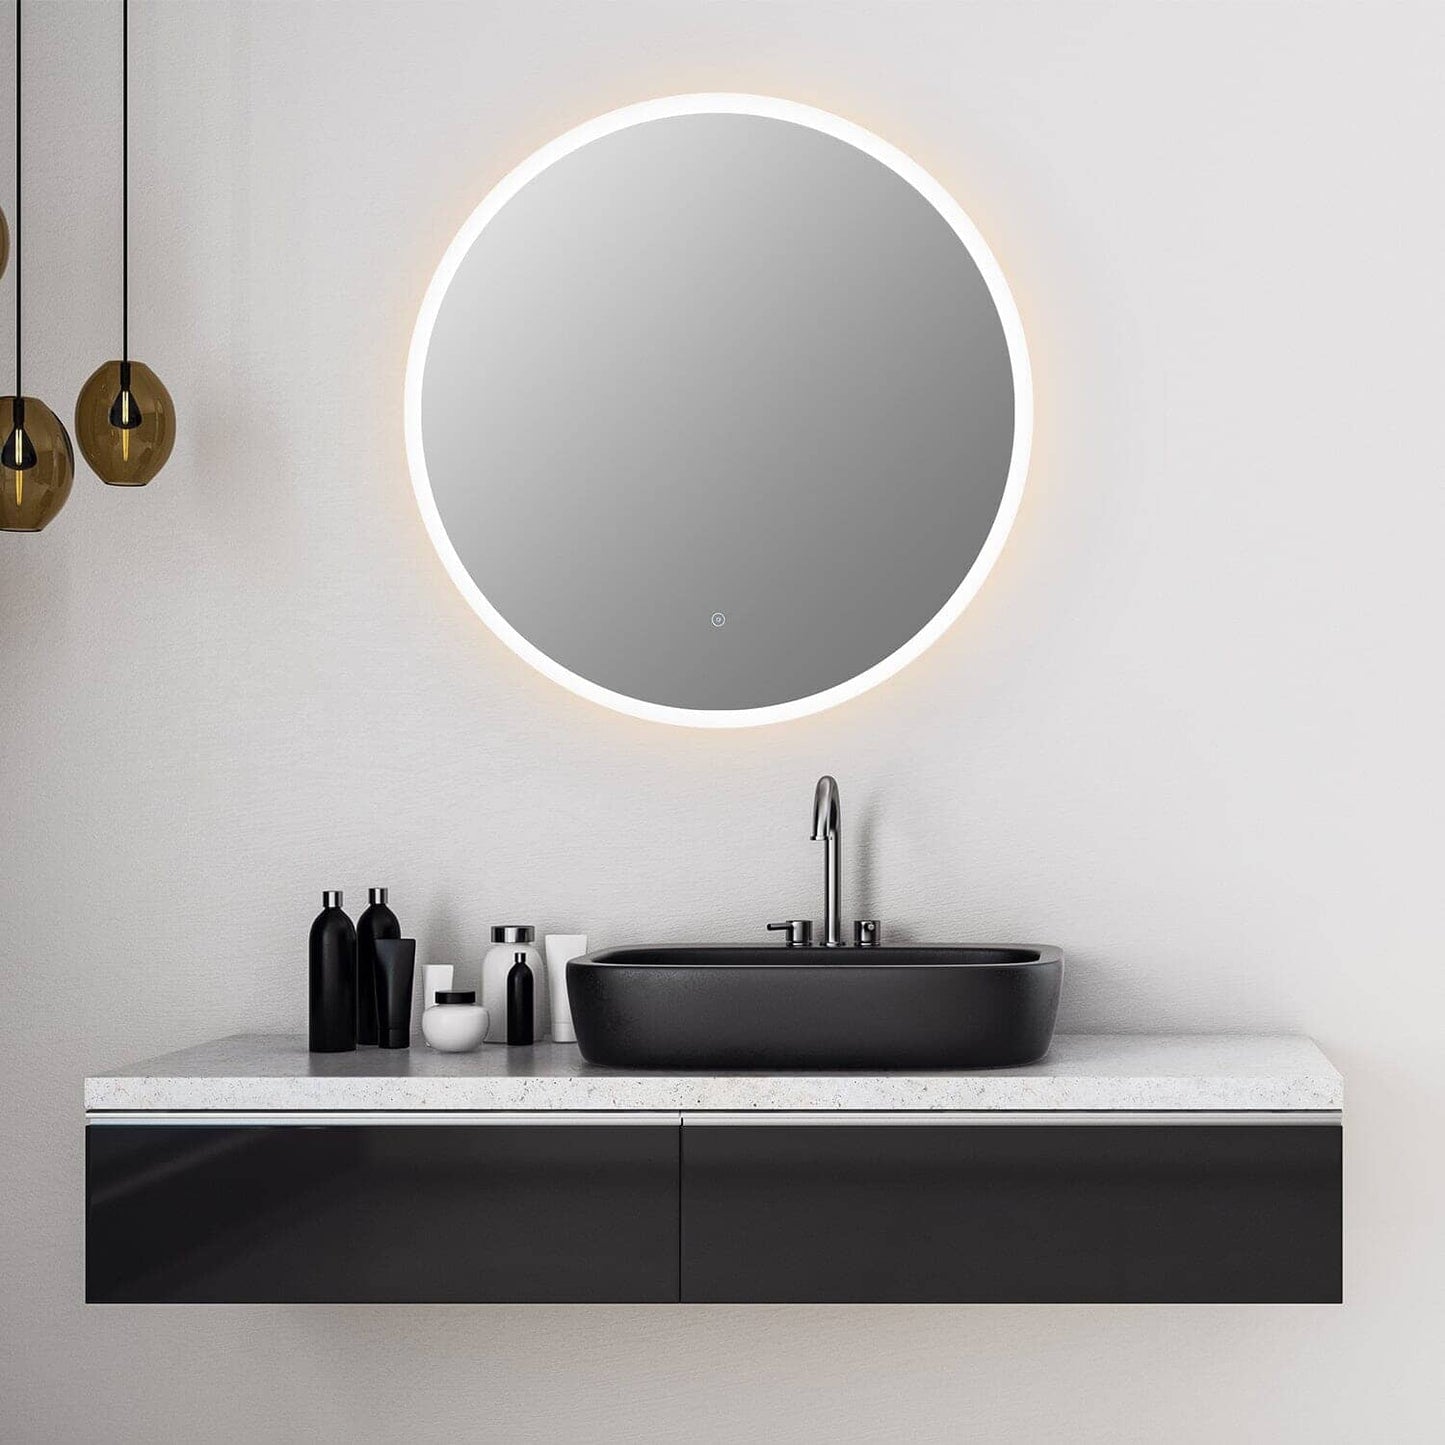 Vanity Mirror - Altair Dimora 32" Round LED - 746032-LED-NF